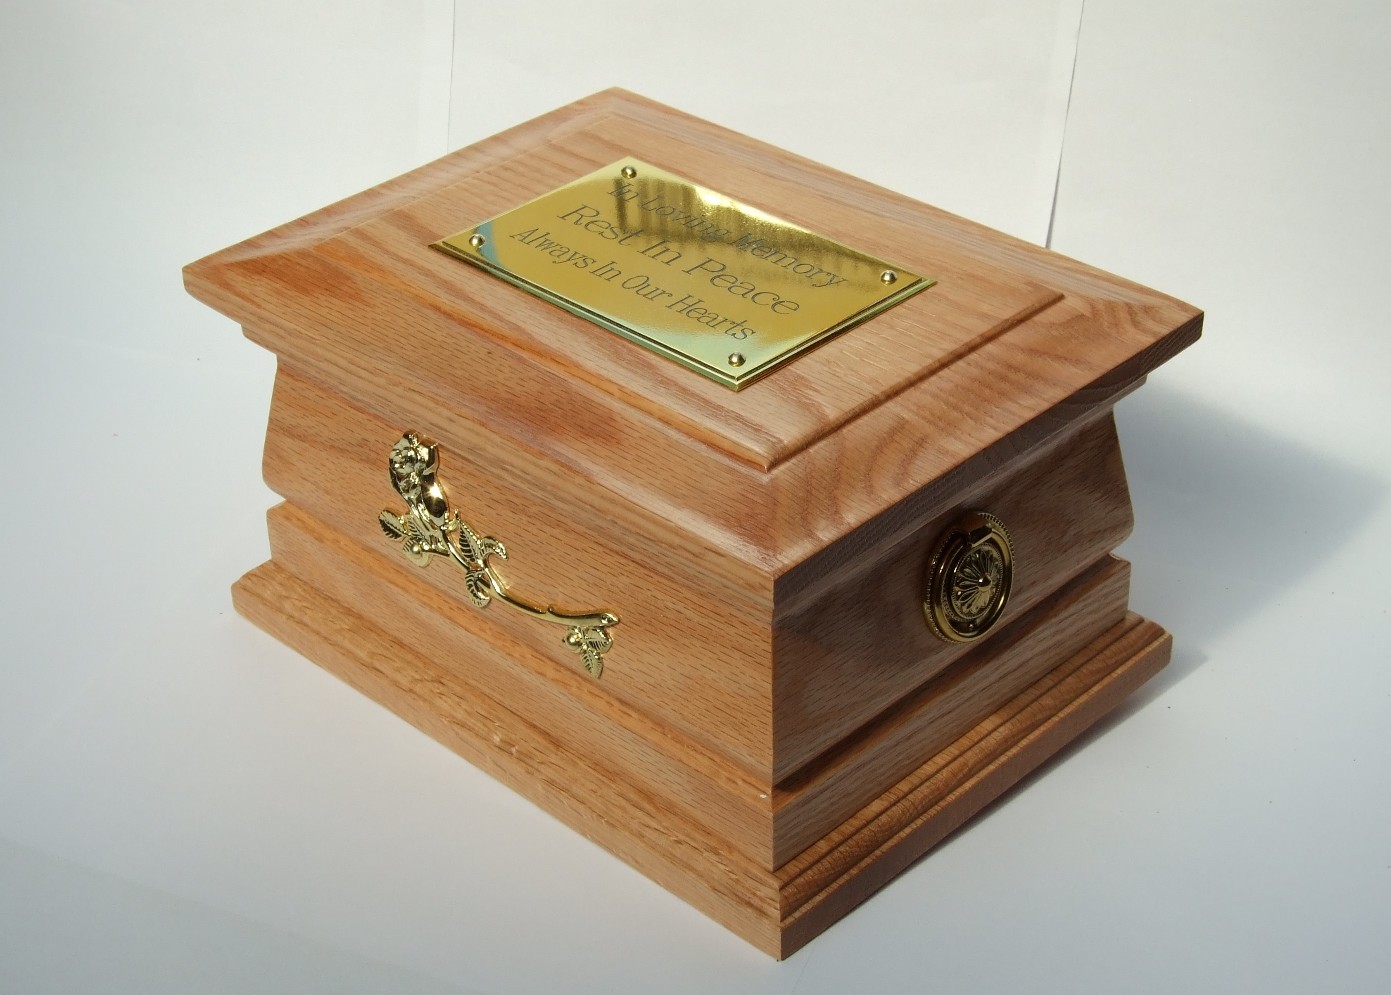 Oak Casket Wooden Cremation Ash Caskets From Jw Caskets